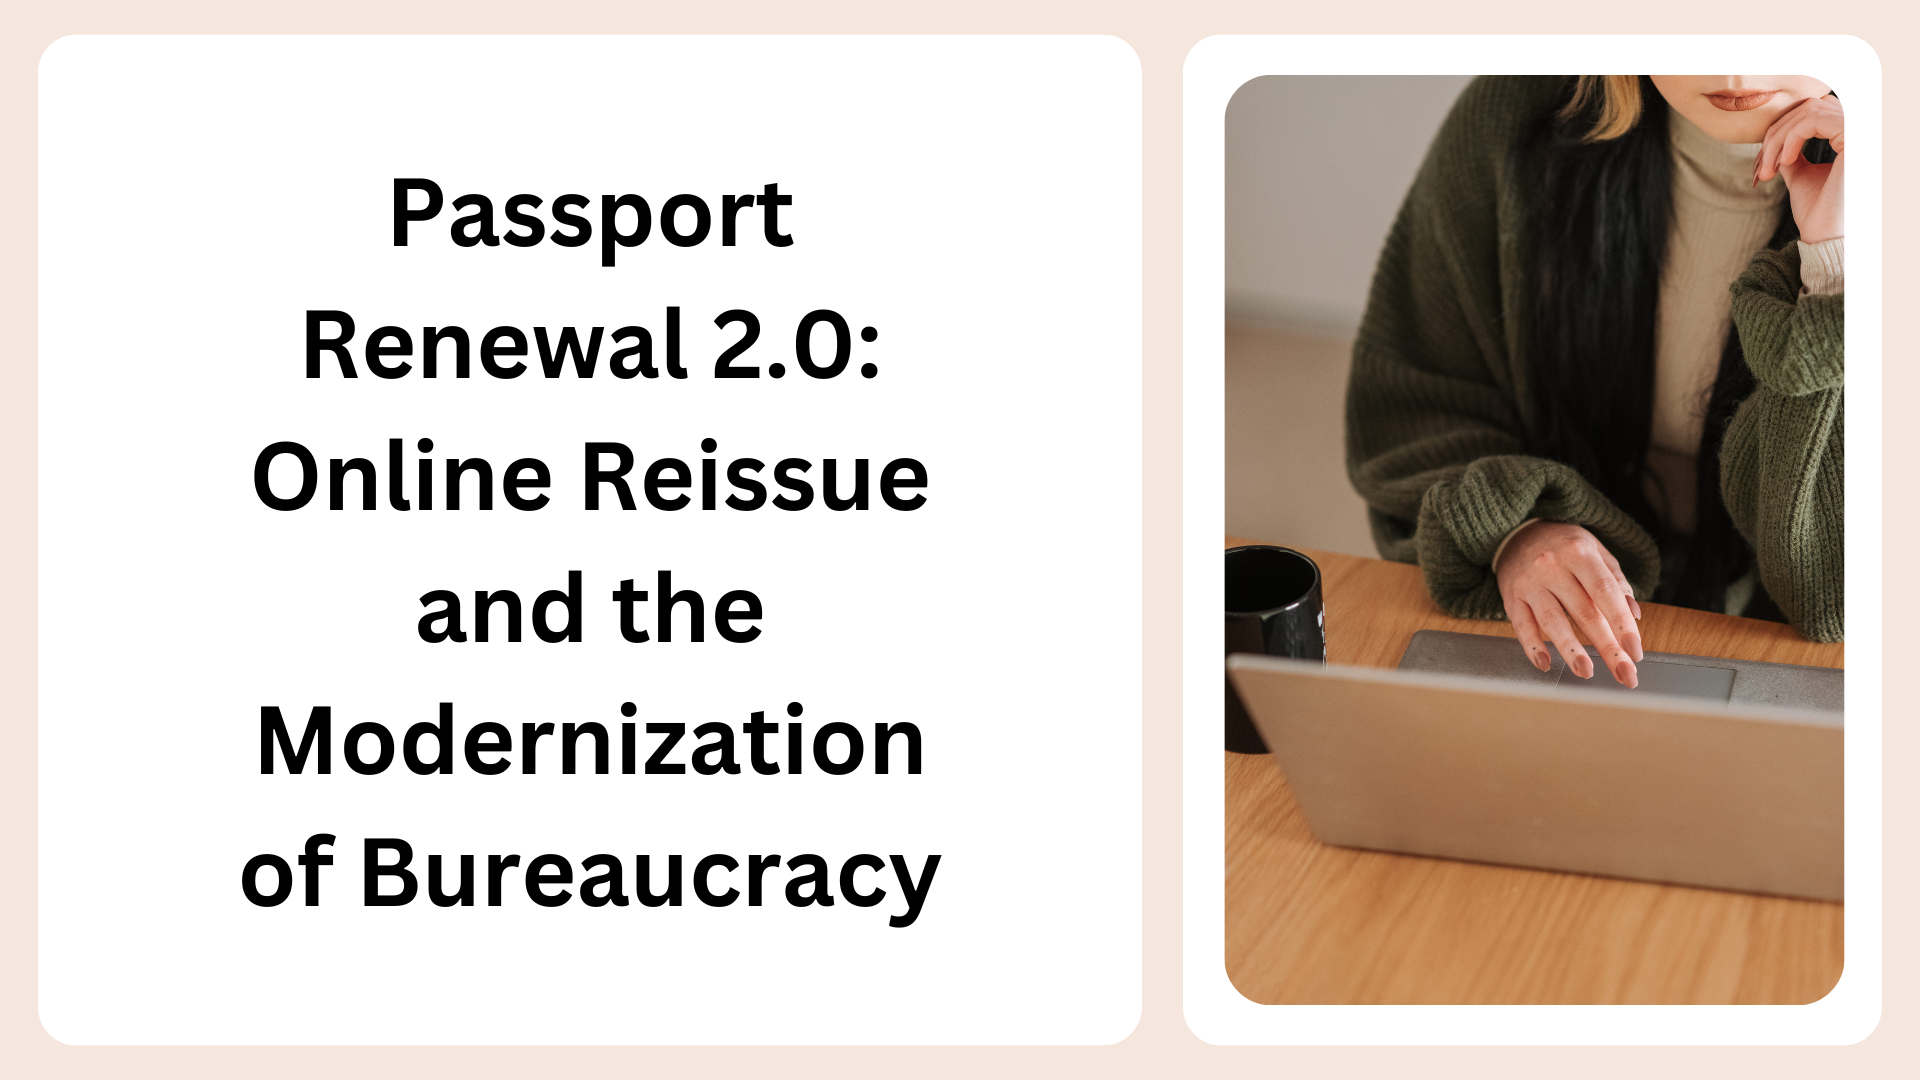 Passport Renewal 2.0 Online Reissue and the Modernization of Bureaucracy